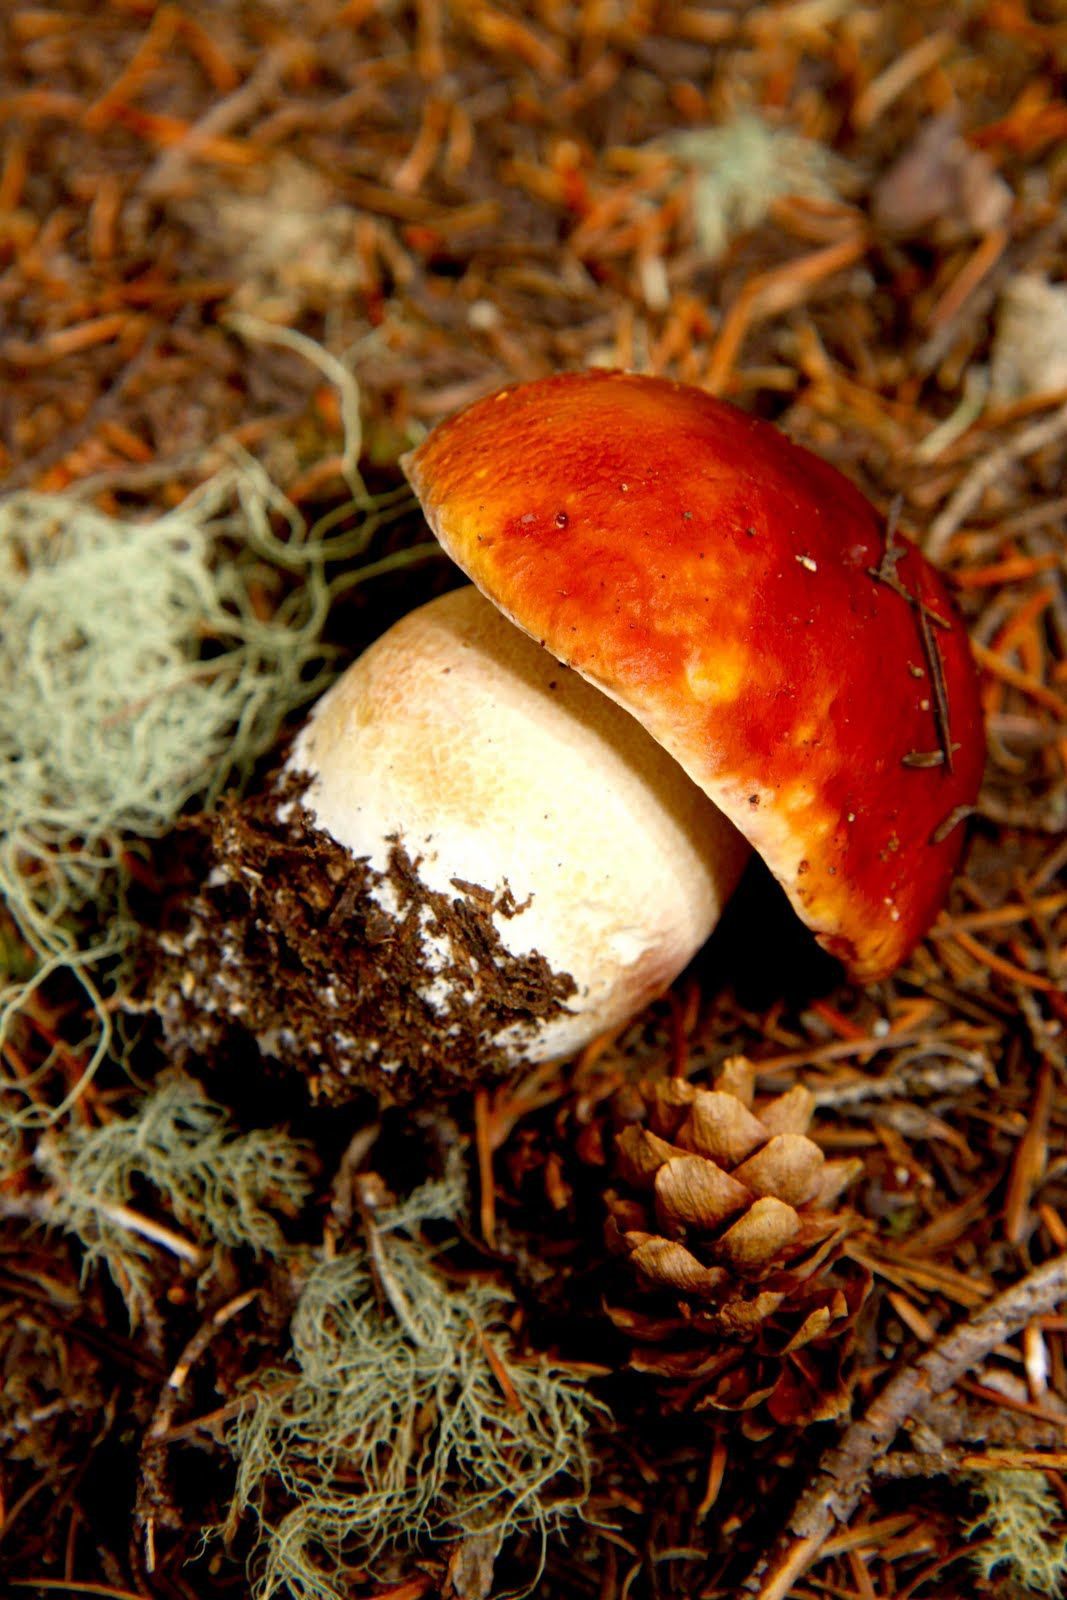 Growing Porcini Mushrooms
 Boletus Edulis aka king bolete or porcini mushroom